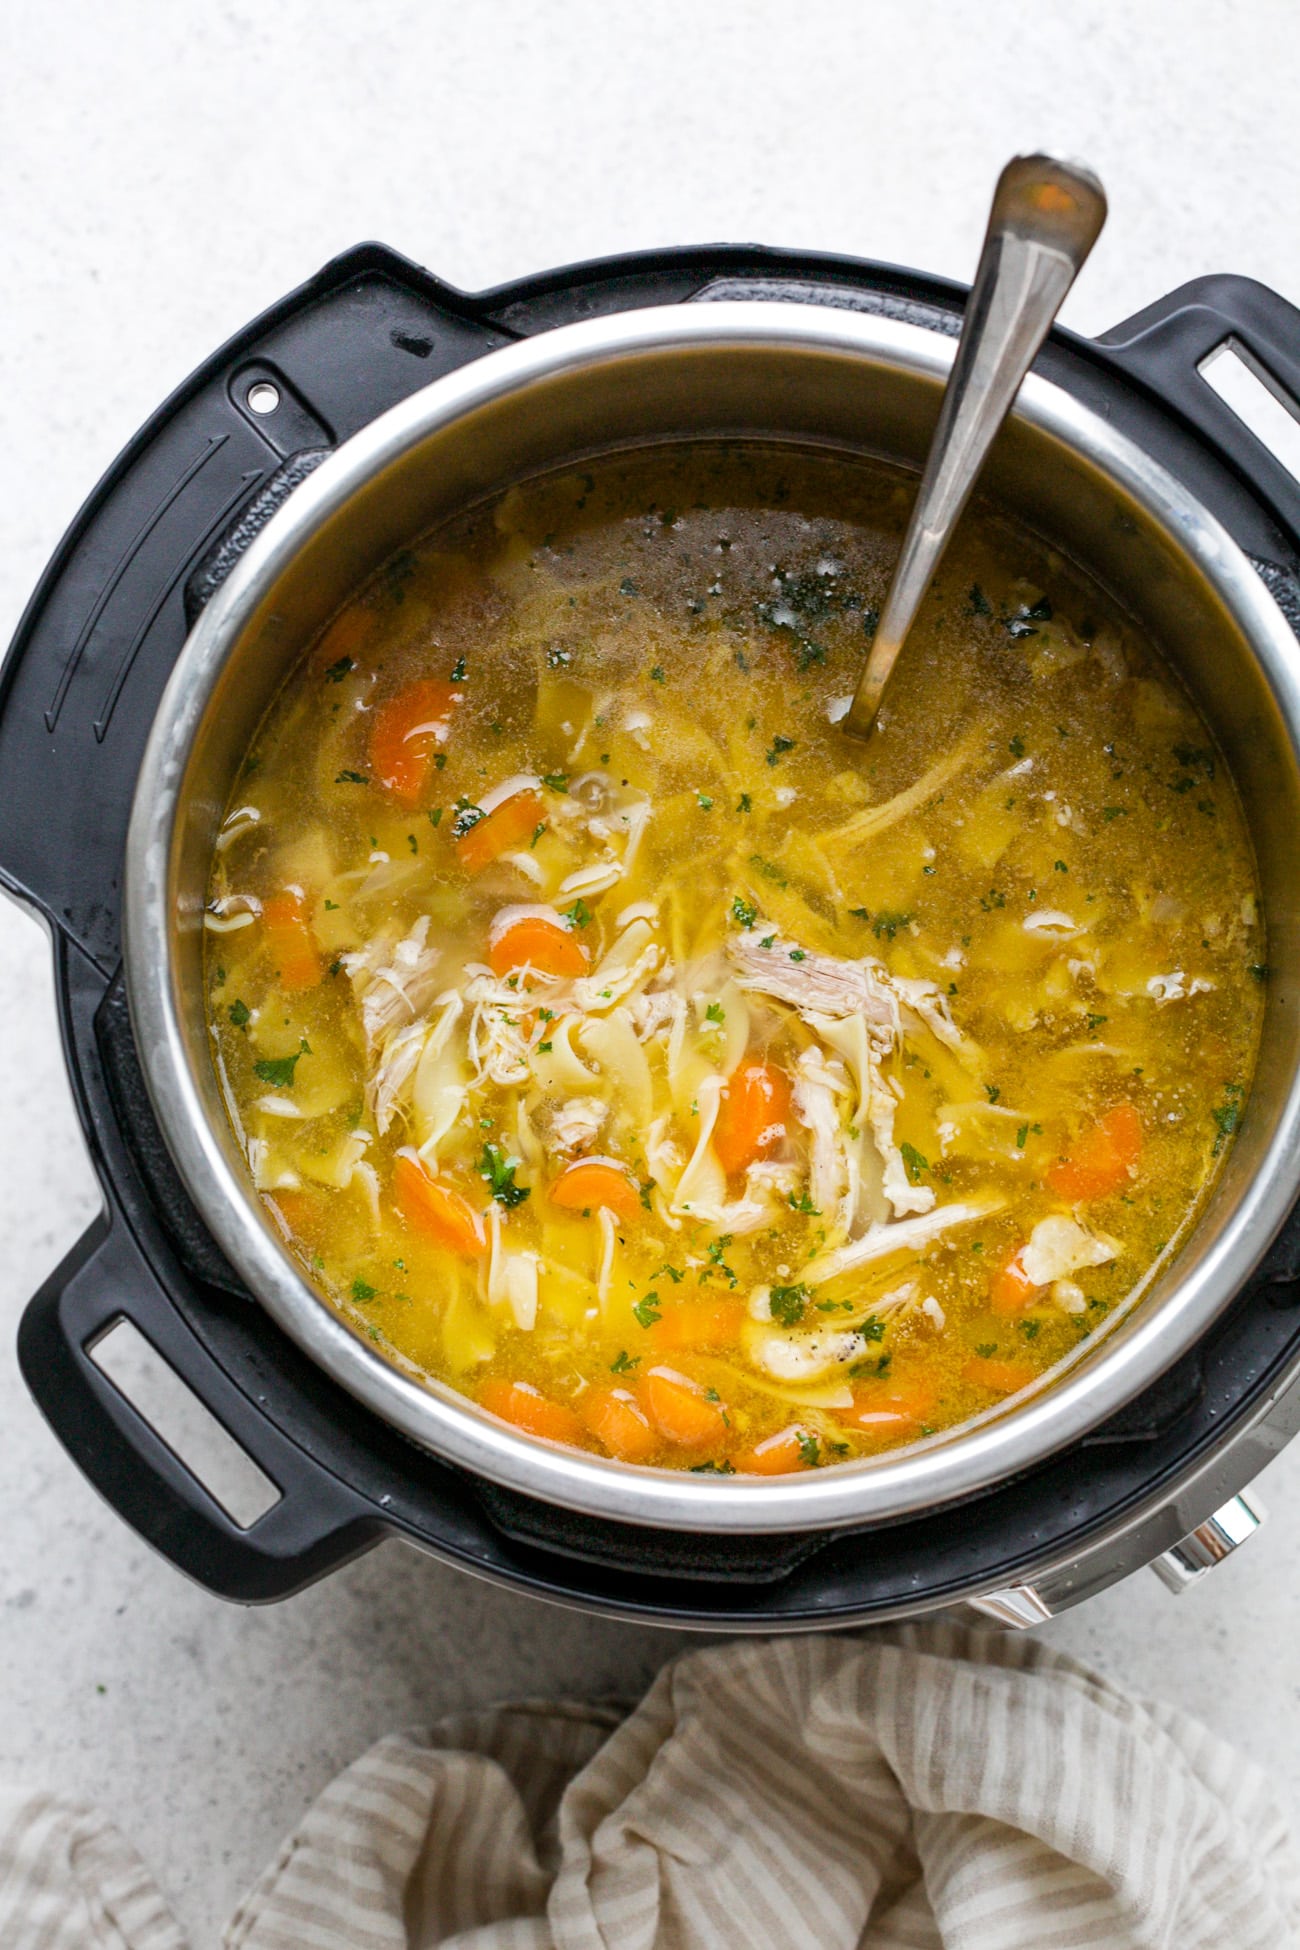 Chicken noodle soup in Instant Pot.